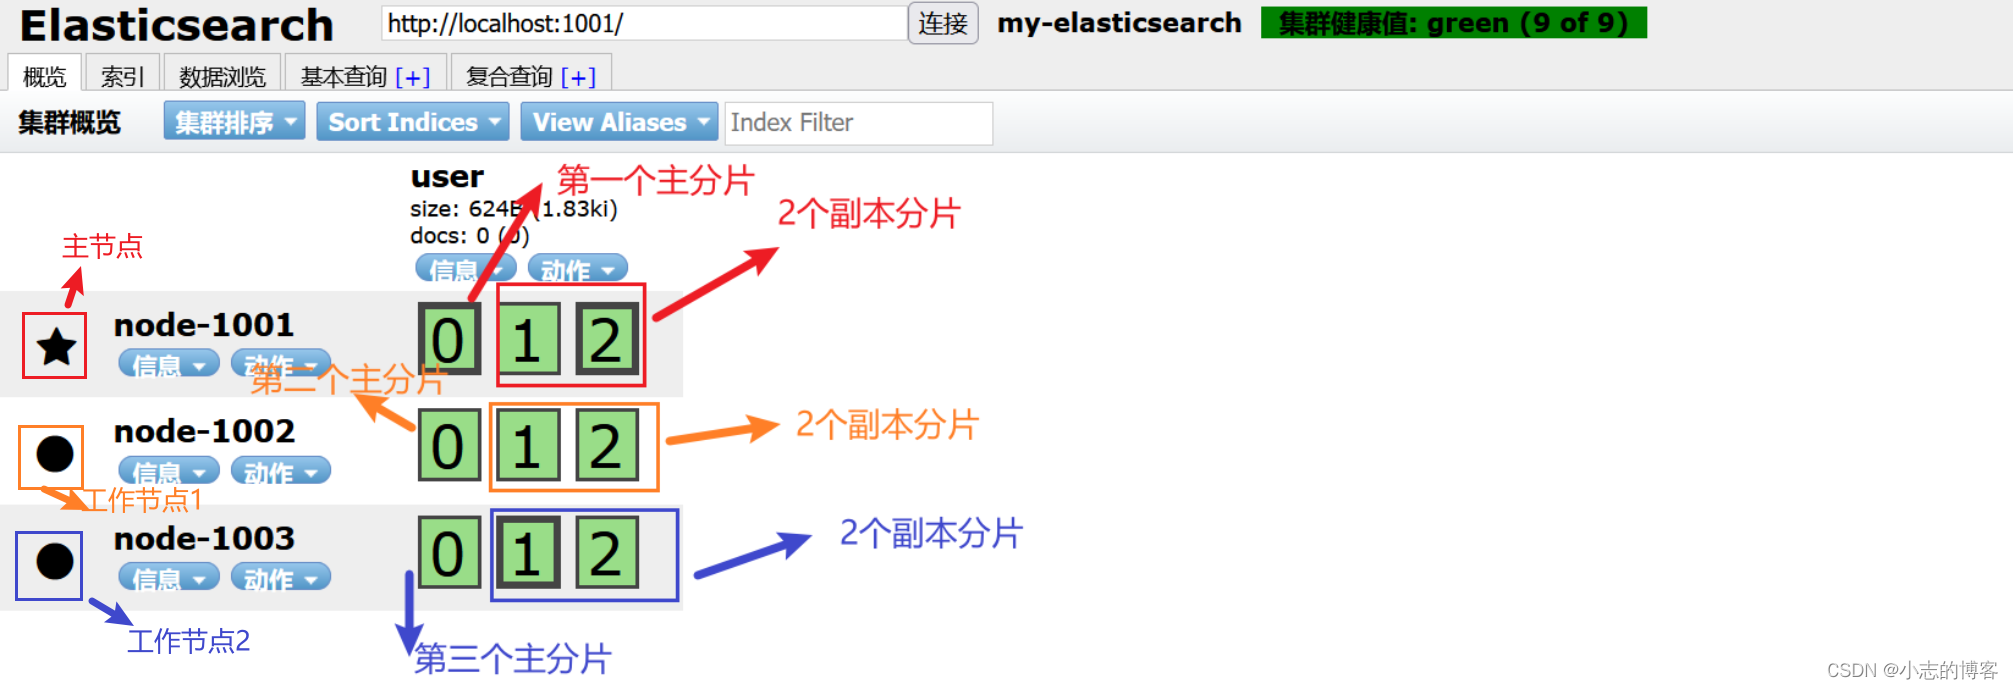 Elasticsearch7.8.0版本进阶——分布式集群（水平扩容）